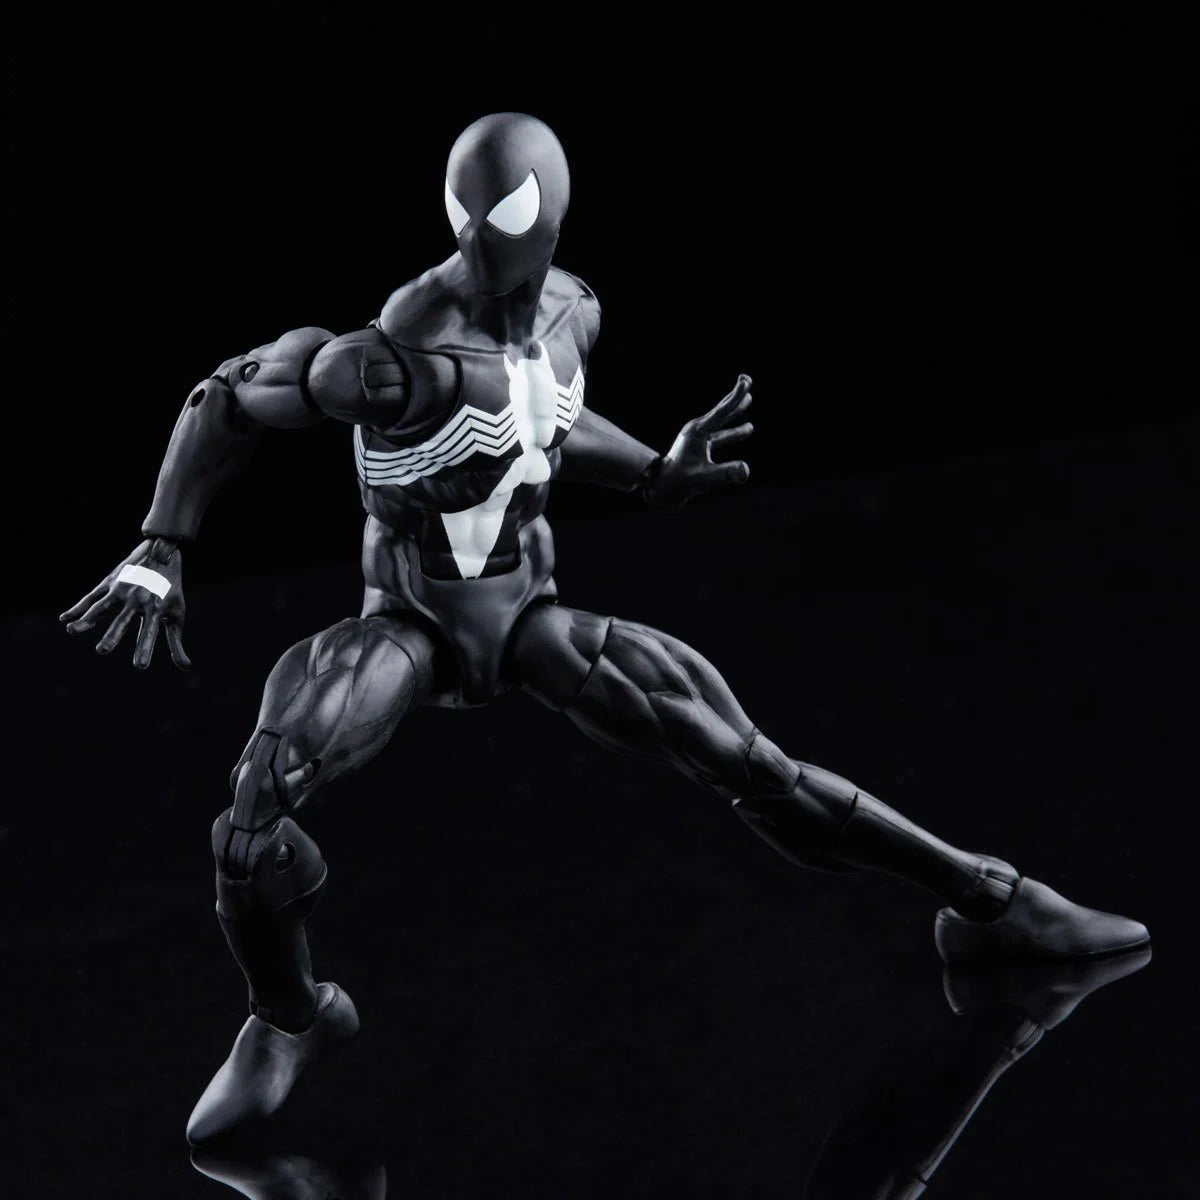 Spider-Man Retro Marvel Legends Symbiote Hasbro